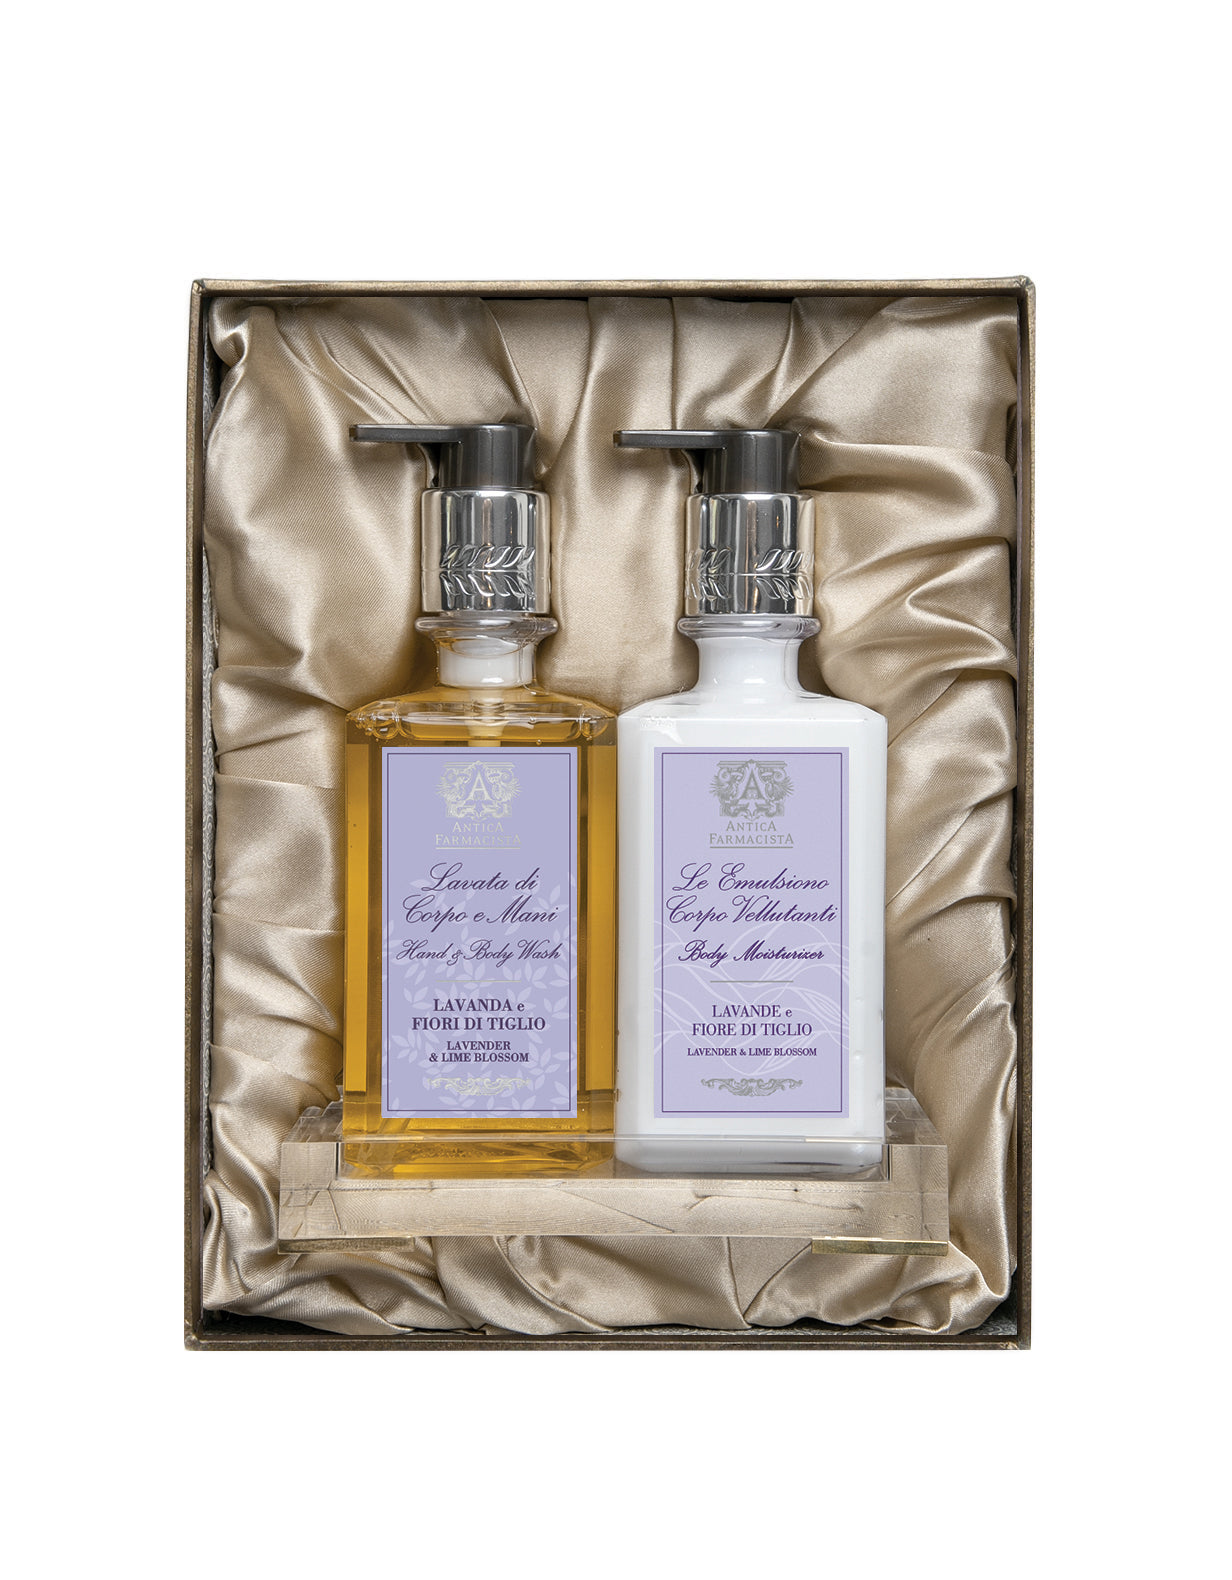 Acrylic Bath & Body Gift Set: Lavender & Lime Blossom